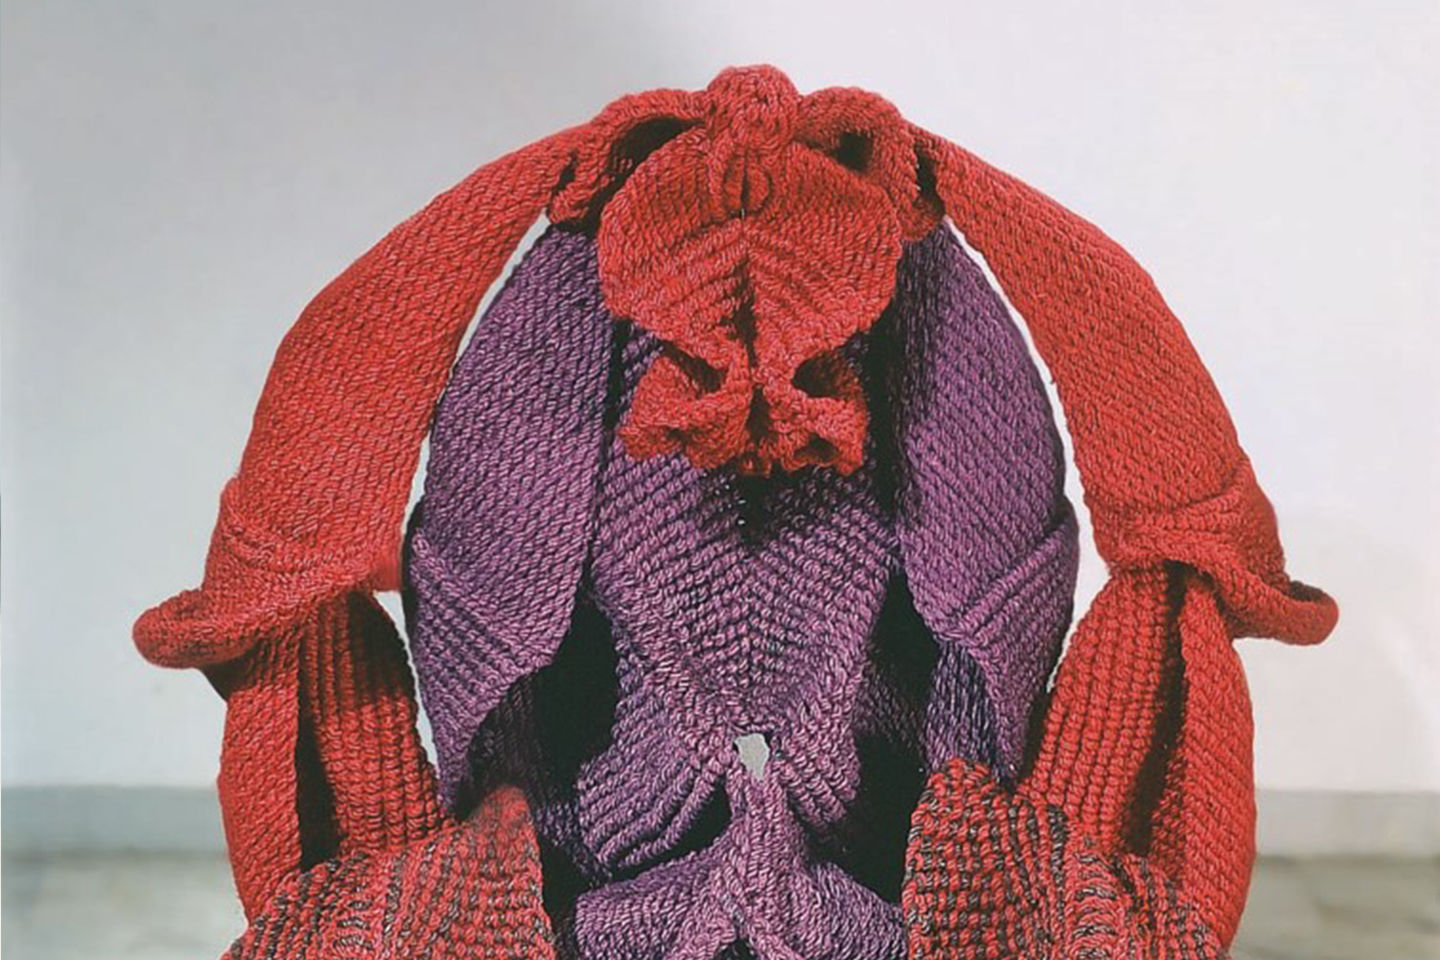 Detail of Mrinalini Mukherjee’s fibre red and purple sculpture depicting  unfurling forms that resemble female genitalia.